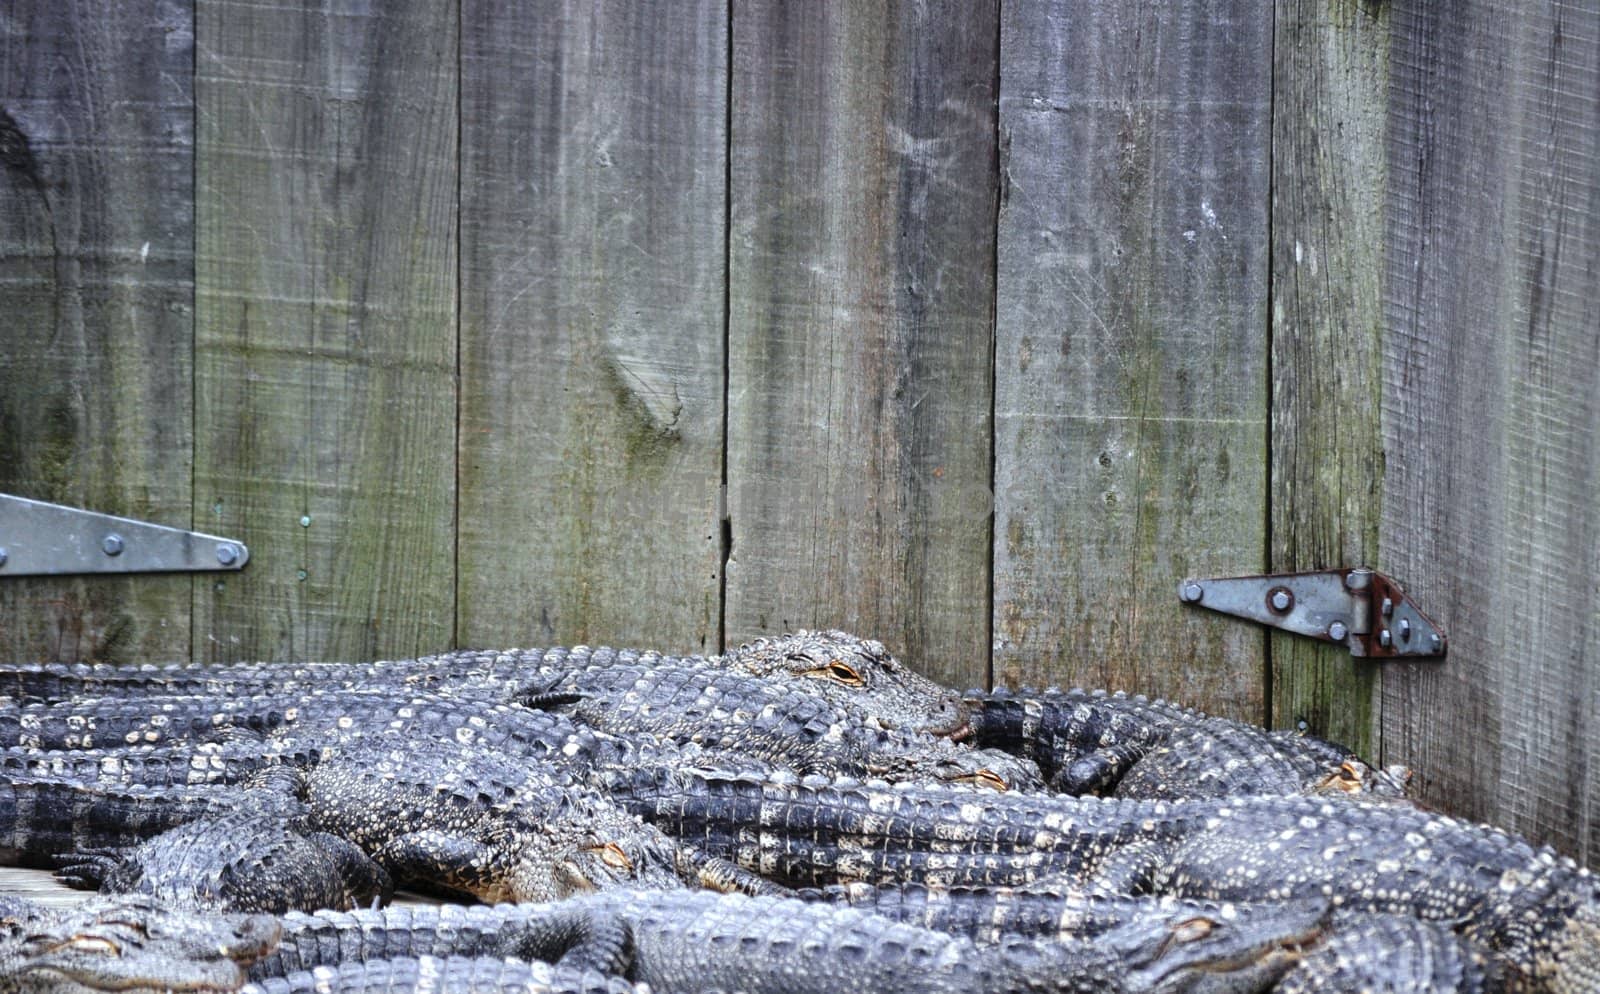 Alligator background by RefocusPhoto